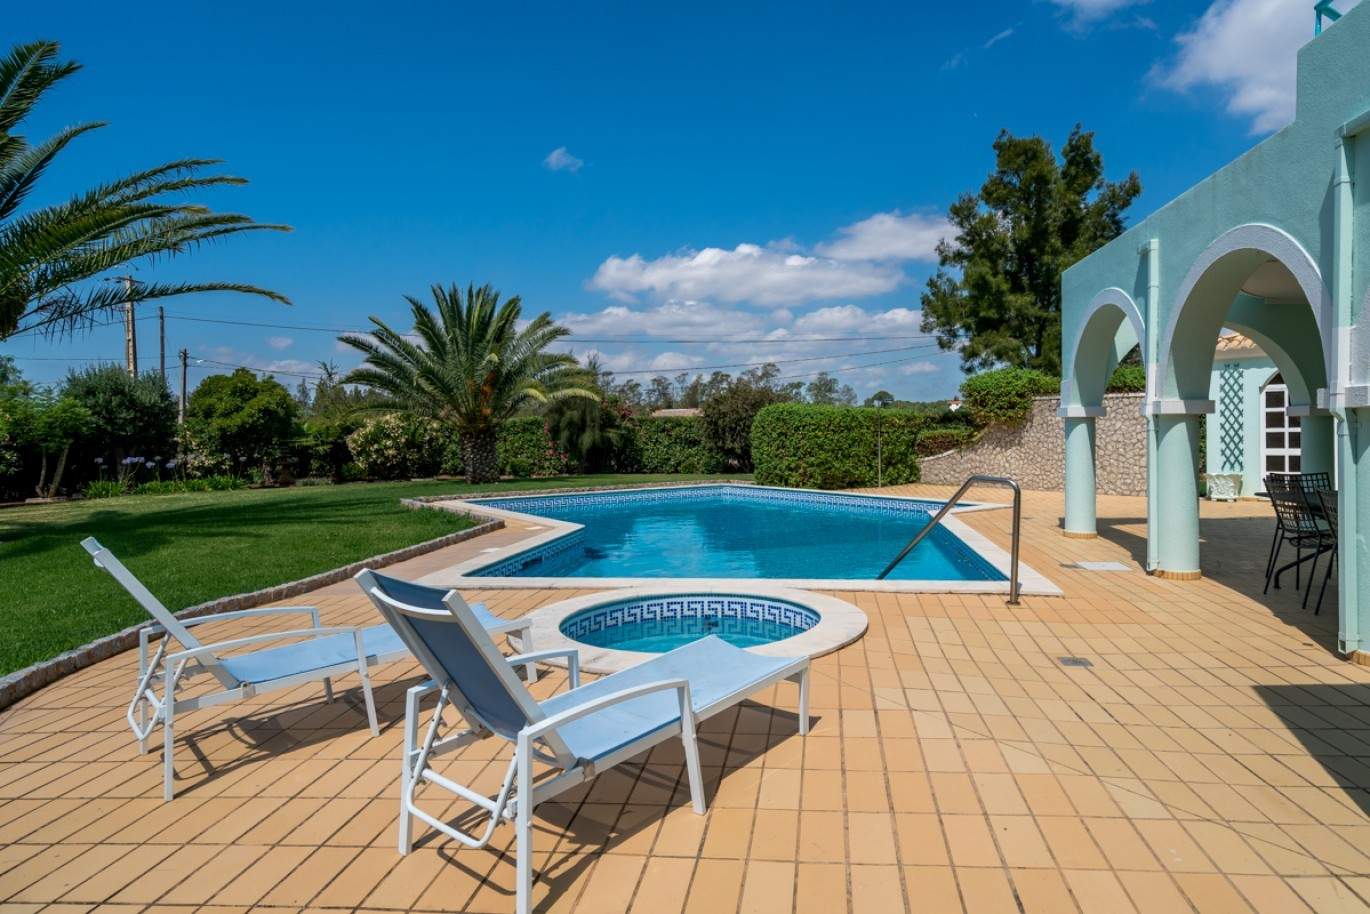 Venta de vivienda con piscina en la Penina, Alvor, Algarve, Portugal_83414